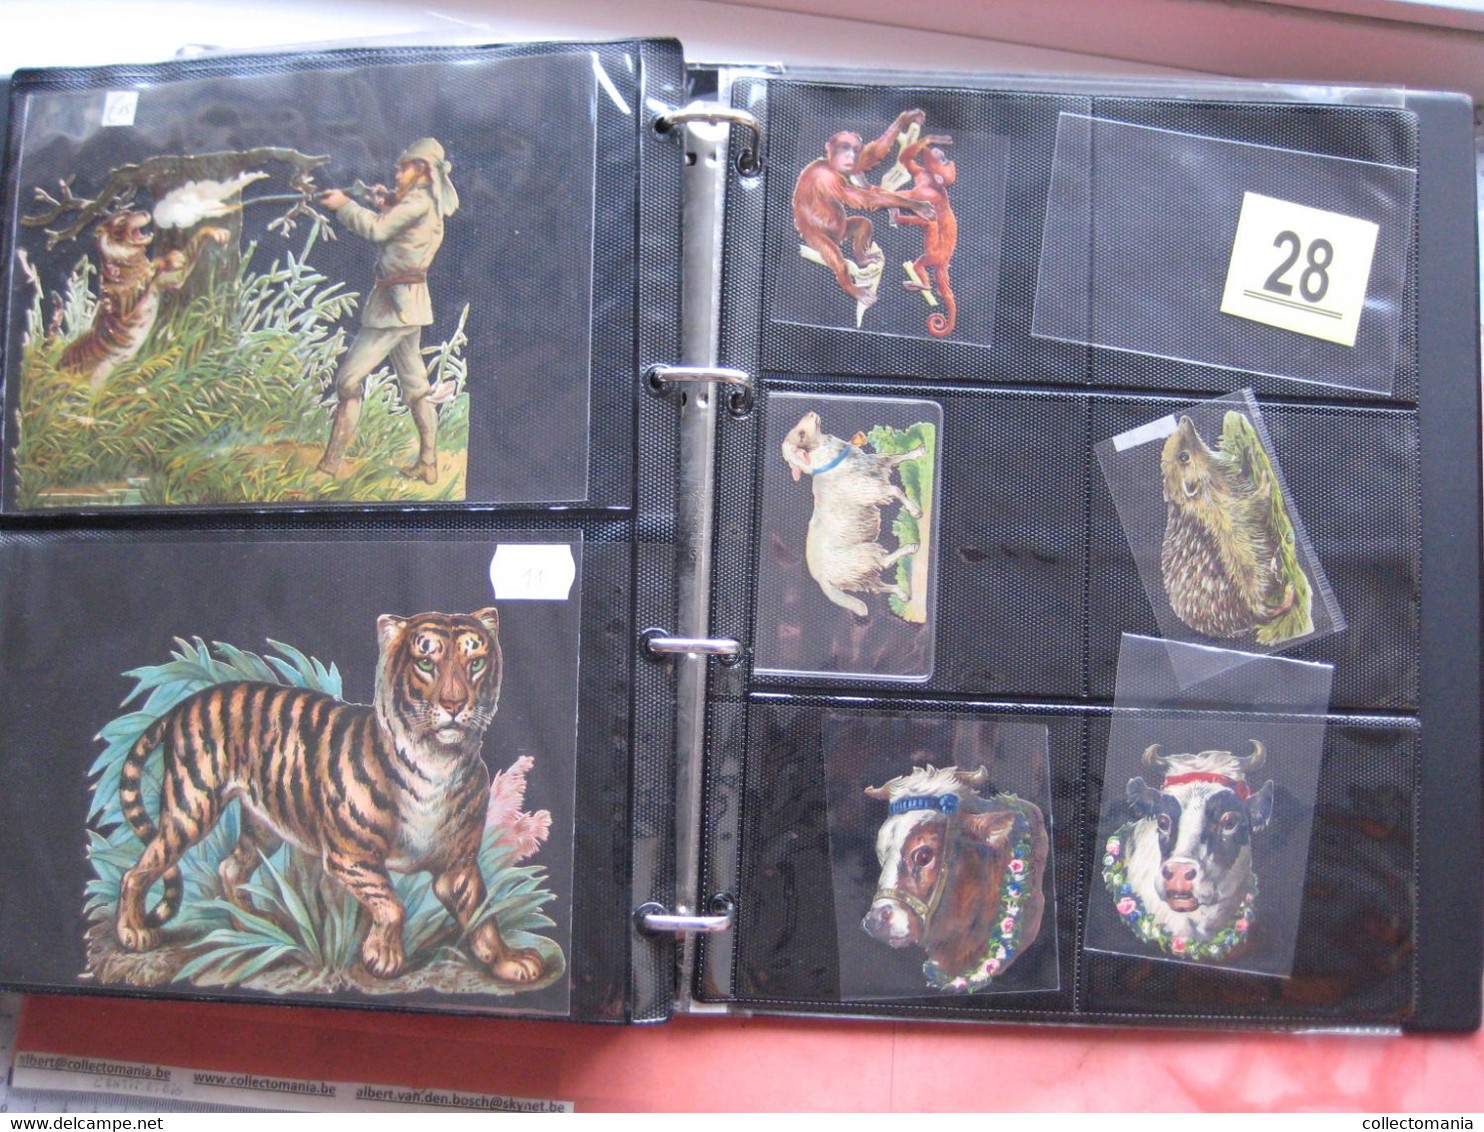 19th century each chromo fotograped (count yourself ) SCRAPS MAP04- fish, tiger, hunter, indians GLANS BILDER, PRE 1900